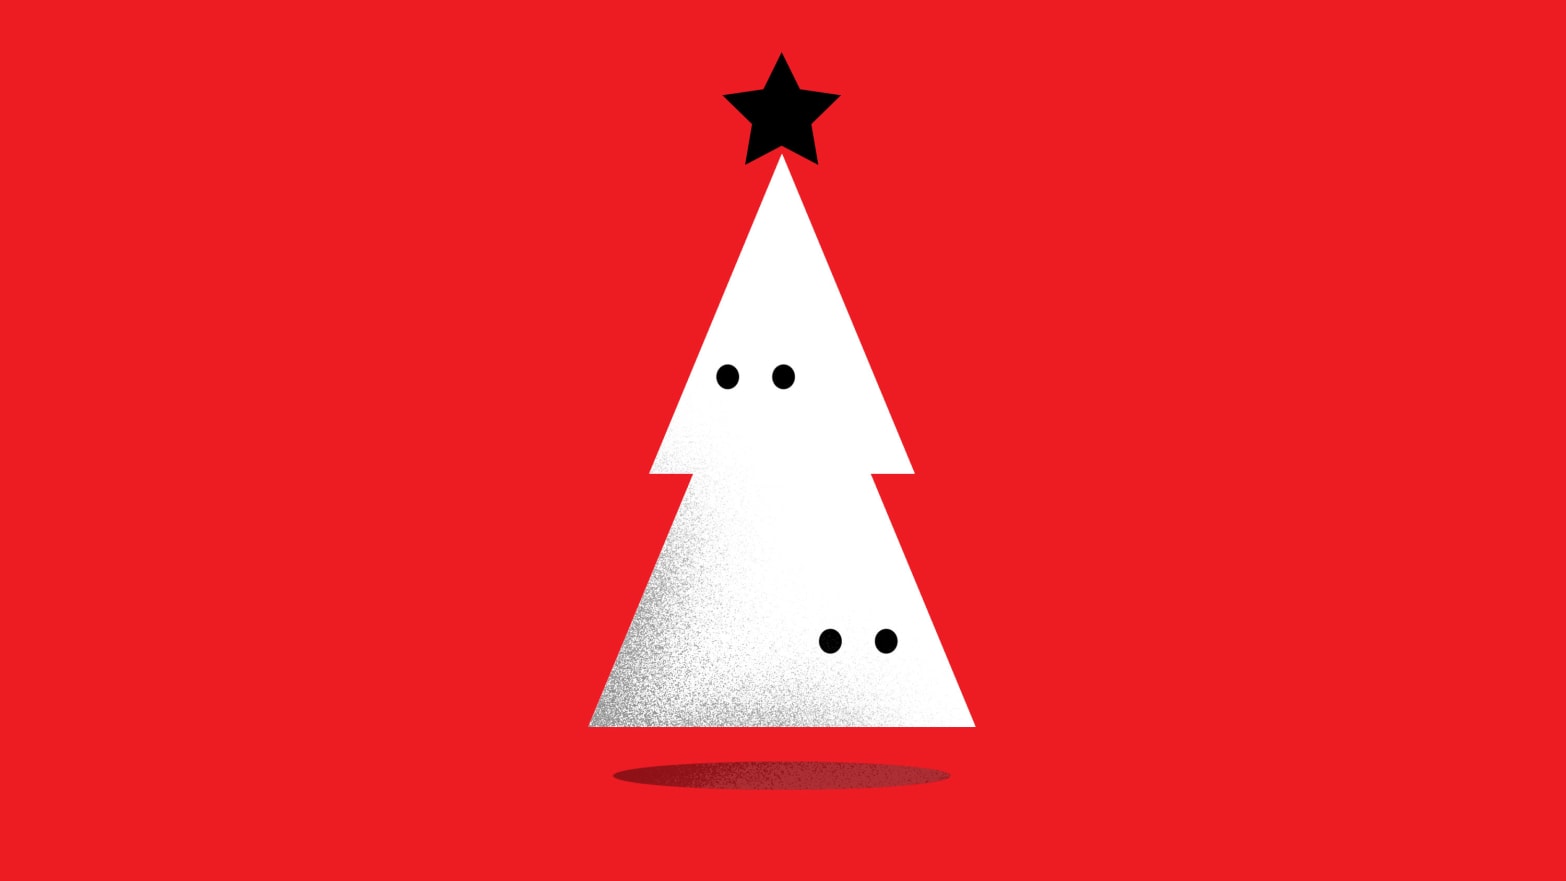 An illustration of a white Christmas tree made from KKK hoods.